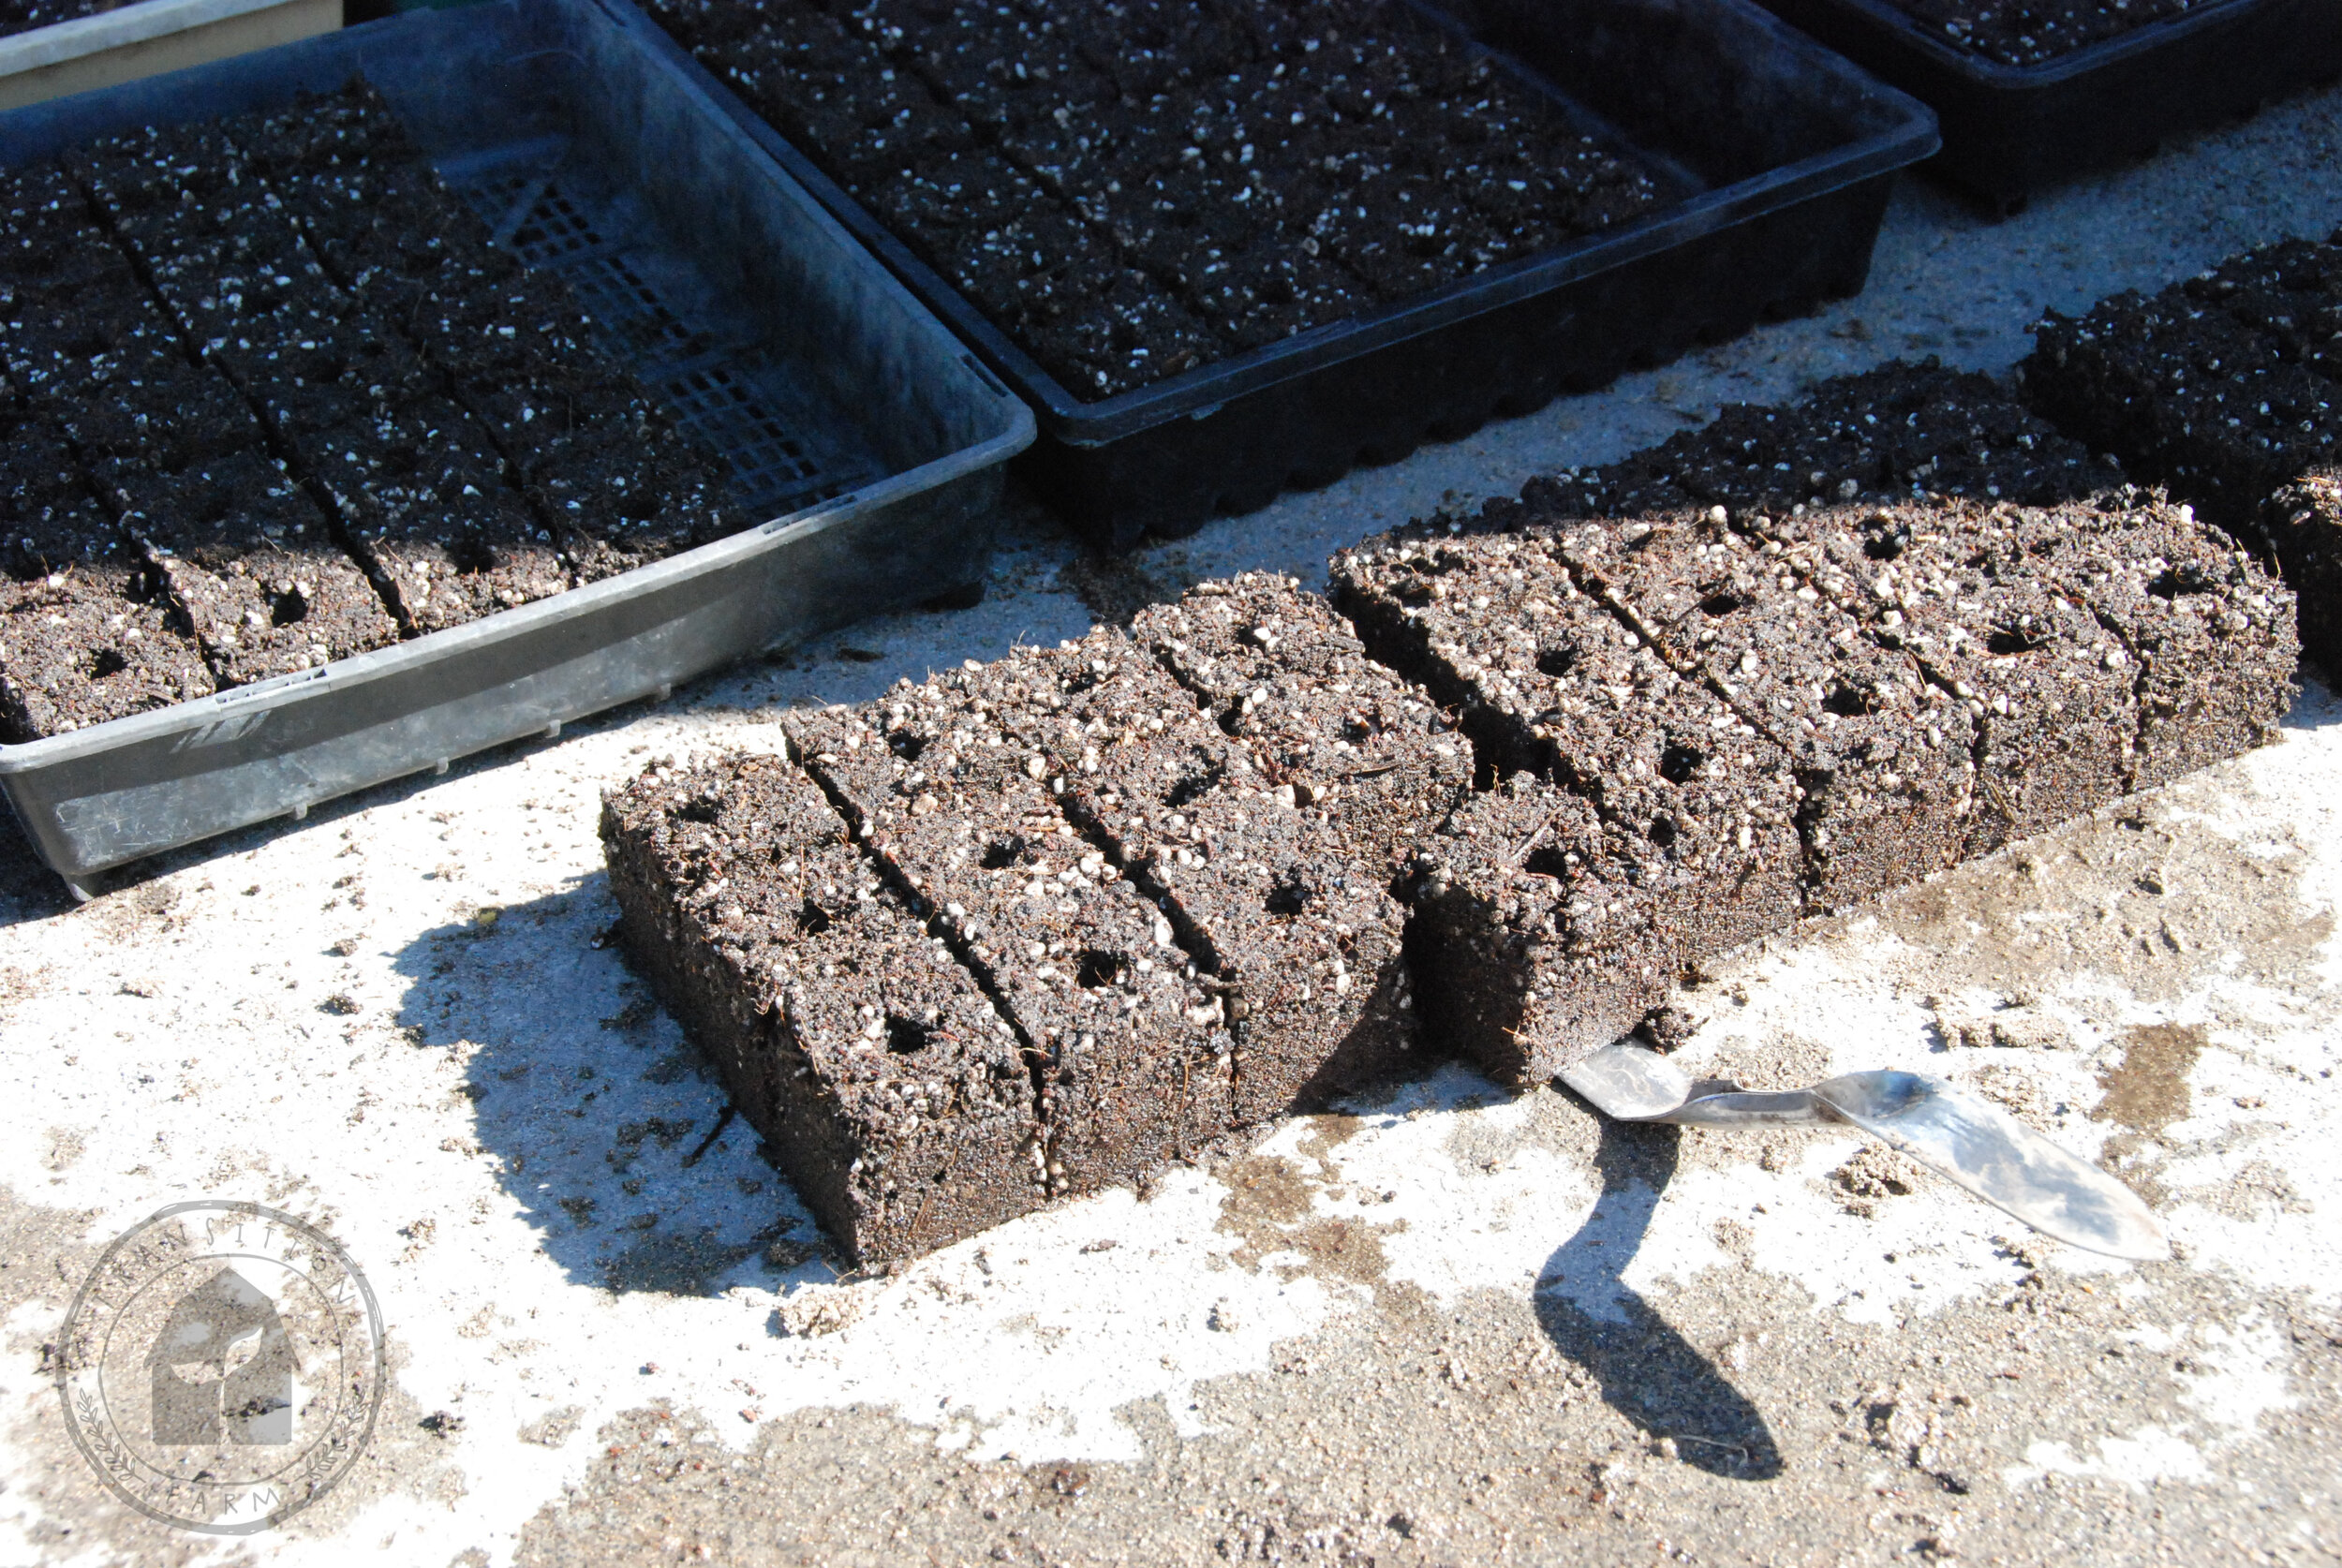   For soil blocks, we have found a full tray is easier to keep evenly moist for raising seedlings.  